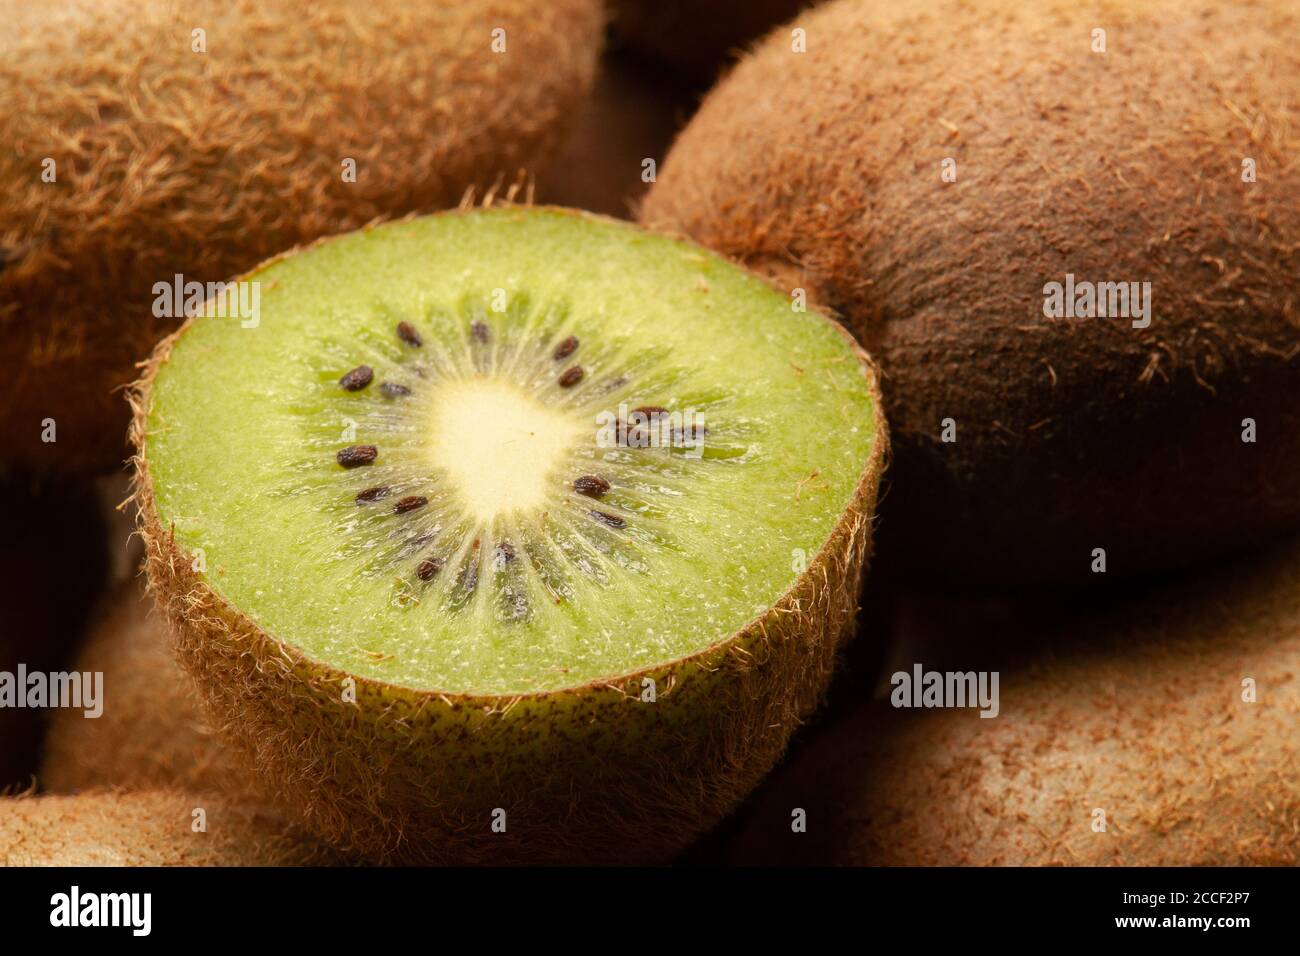 Half Kiwi Fruits Closeup Image Stock Photo